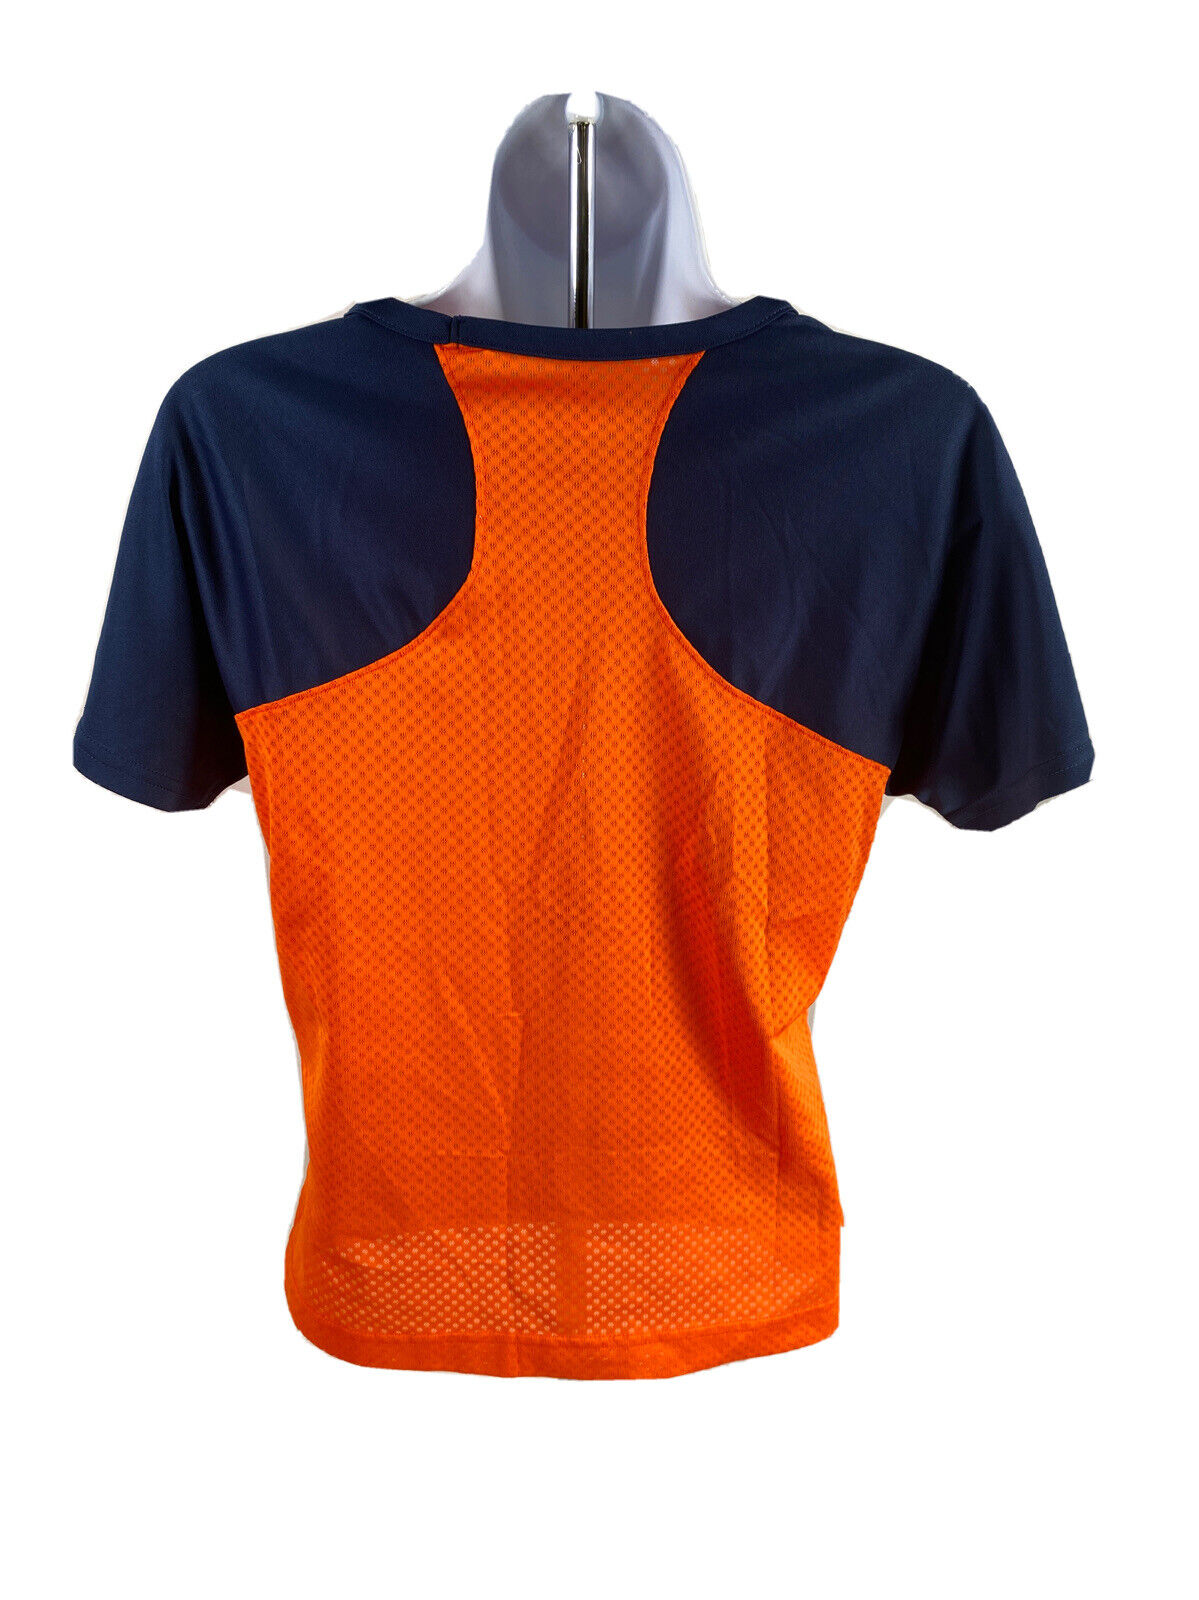 Nike Team Women's Orange/Blue Detroit Tigers Athletic Shirt - S